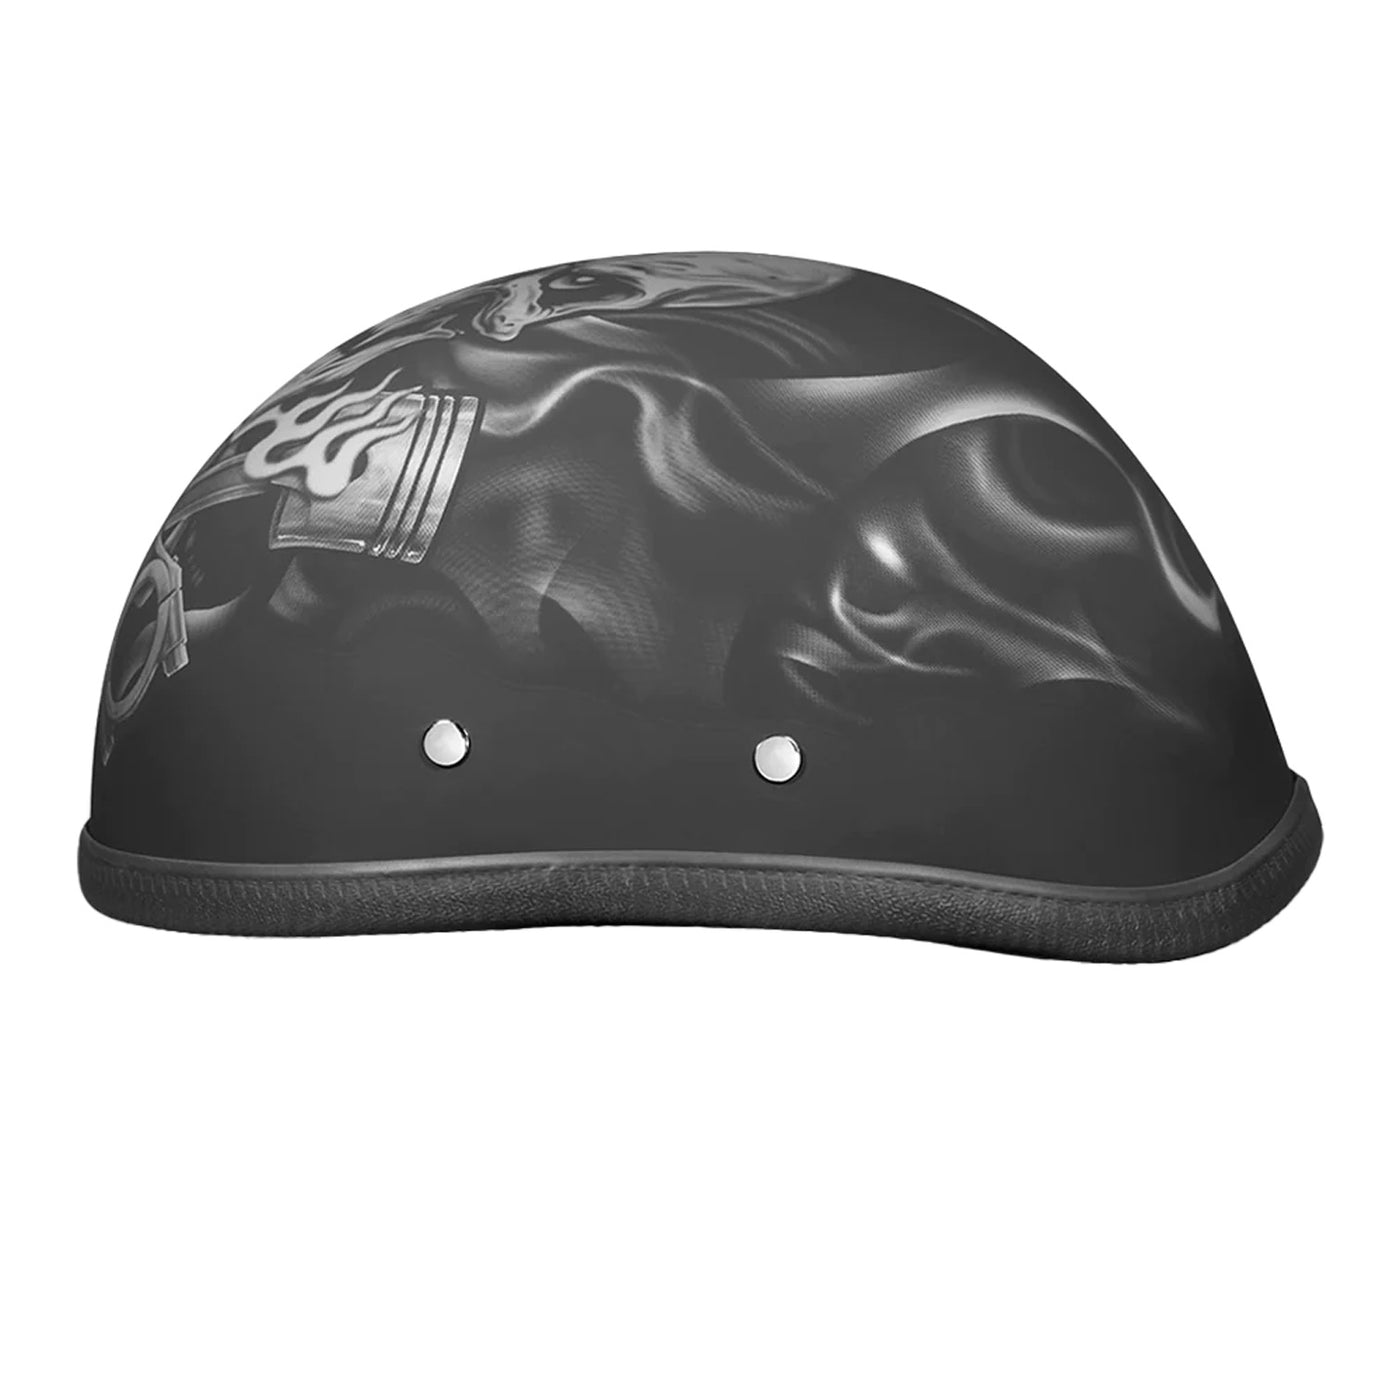 Daytona Helmets Novelty Eagle - Pistons Skull